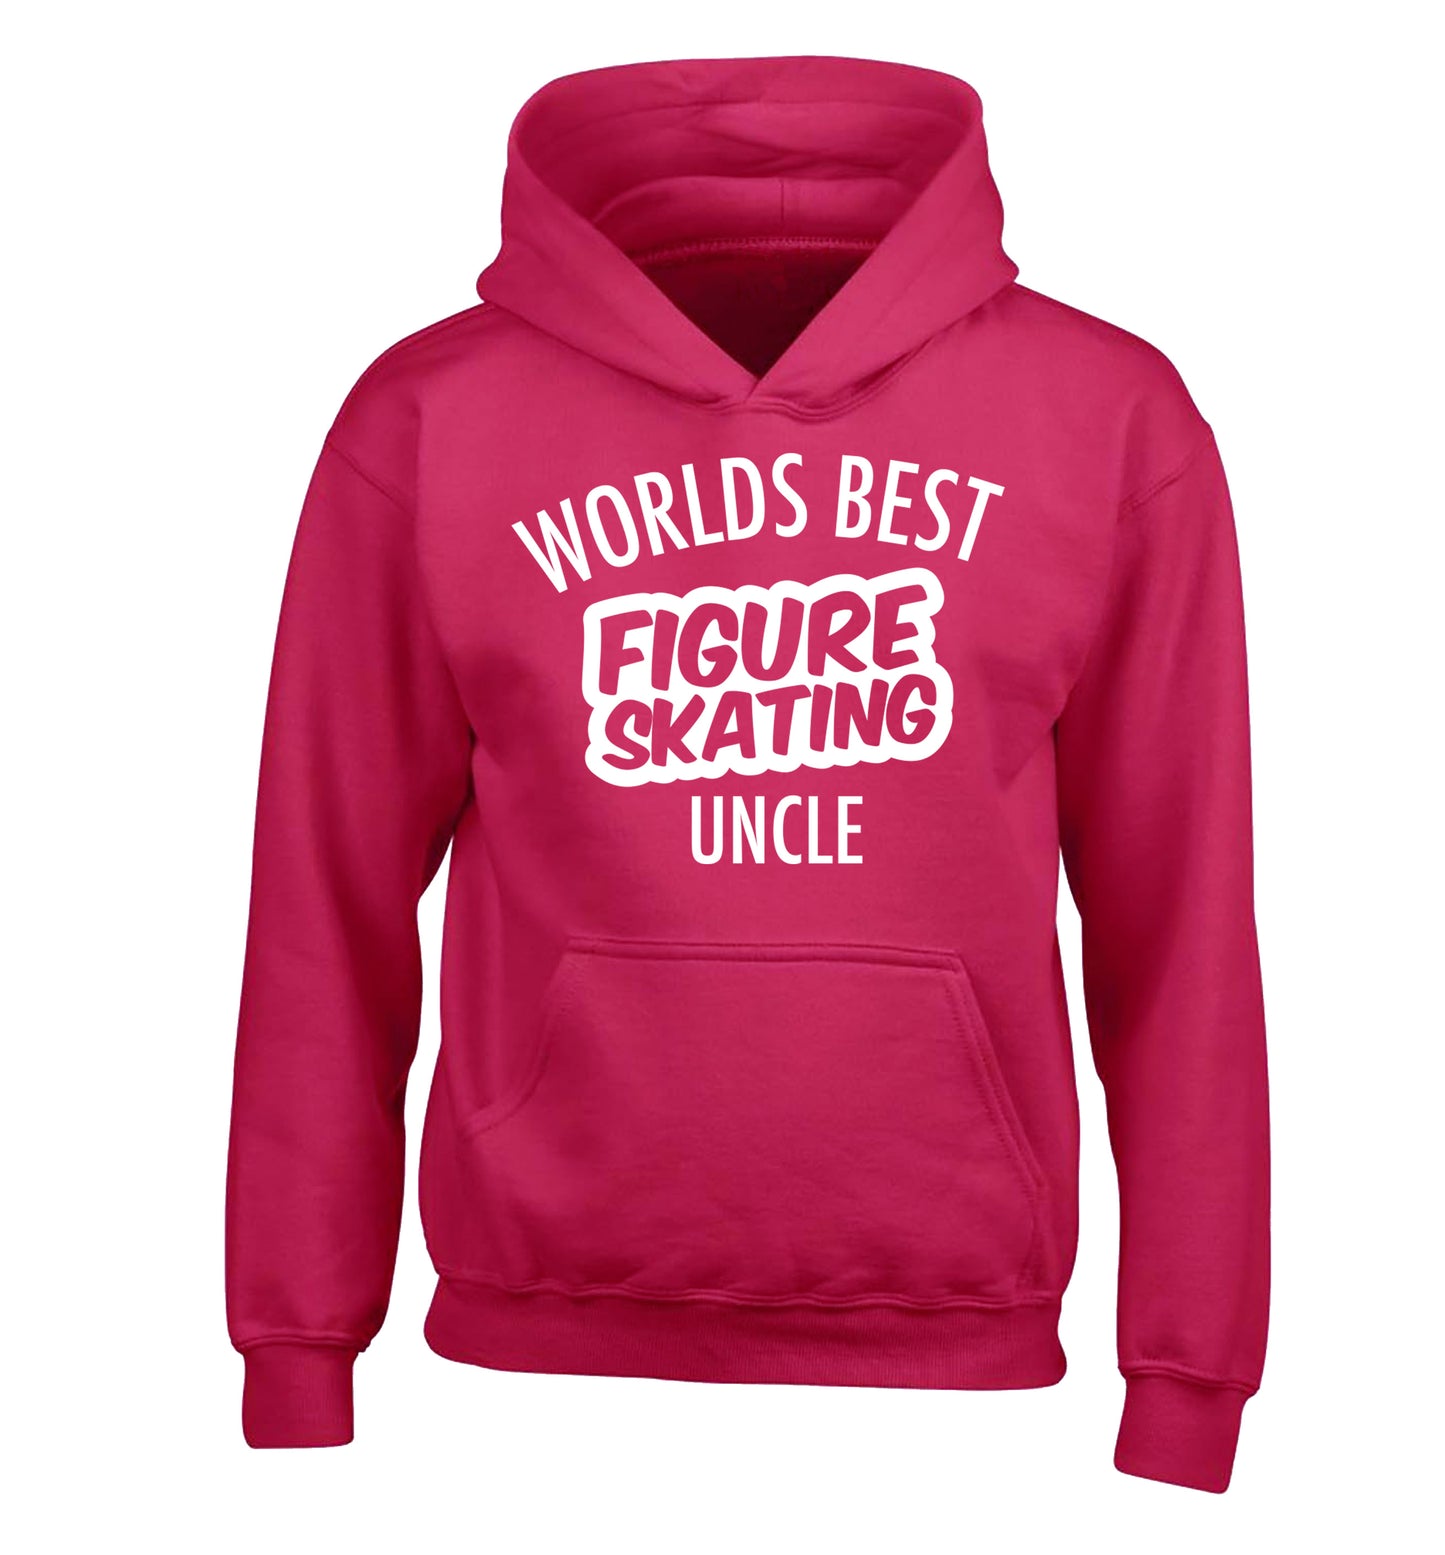 Worlds best figure skating uncle children's pink hoodie 12-14 Years